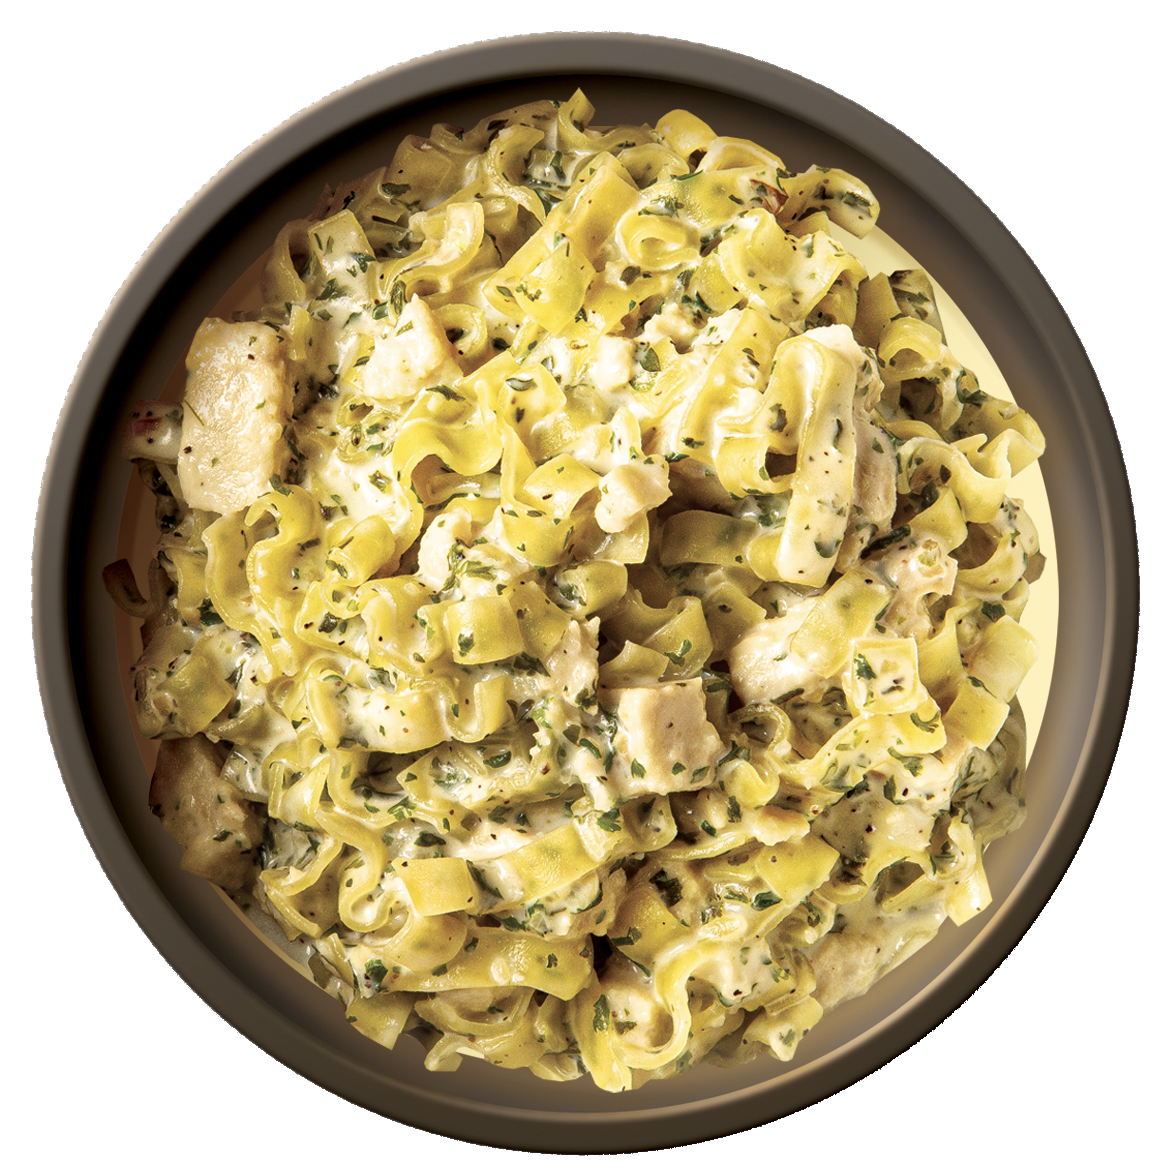 RightOnTrek chicken alfredo pasta meal in a bowl